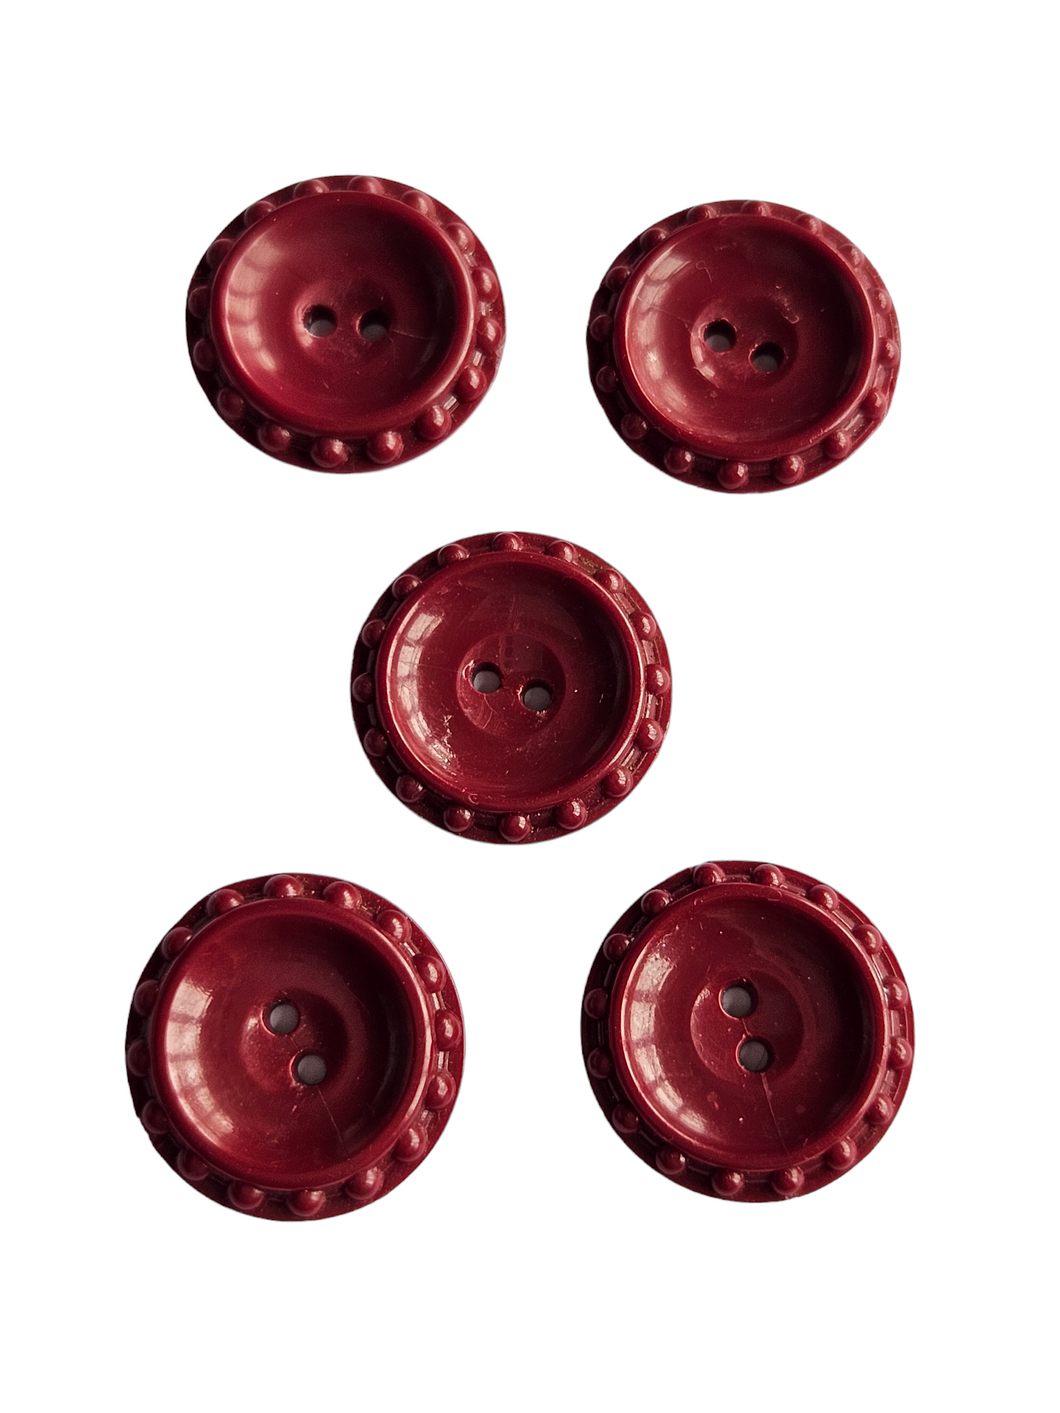 1940s Burgundy Plastic Flower Buttons